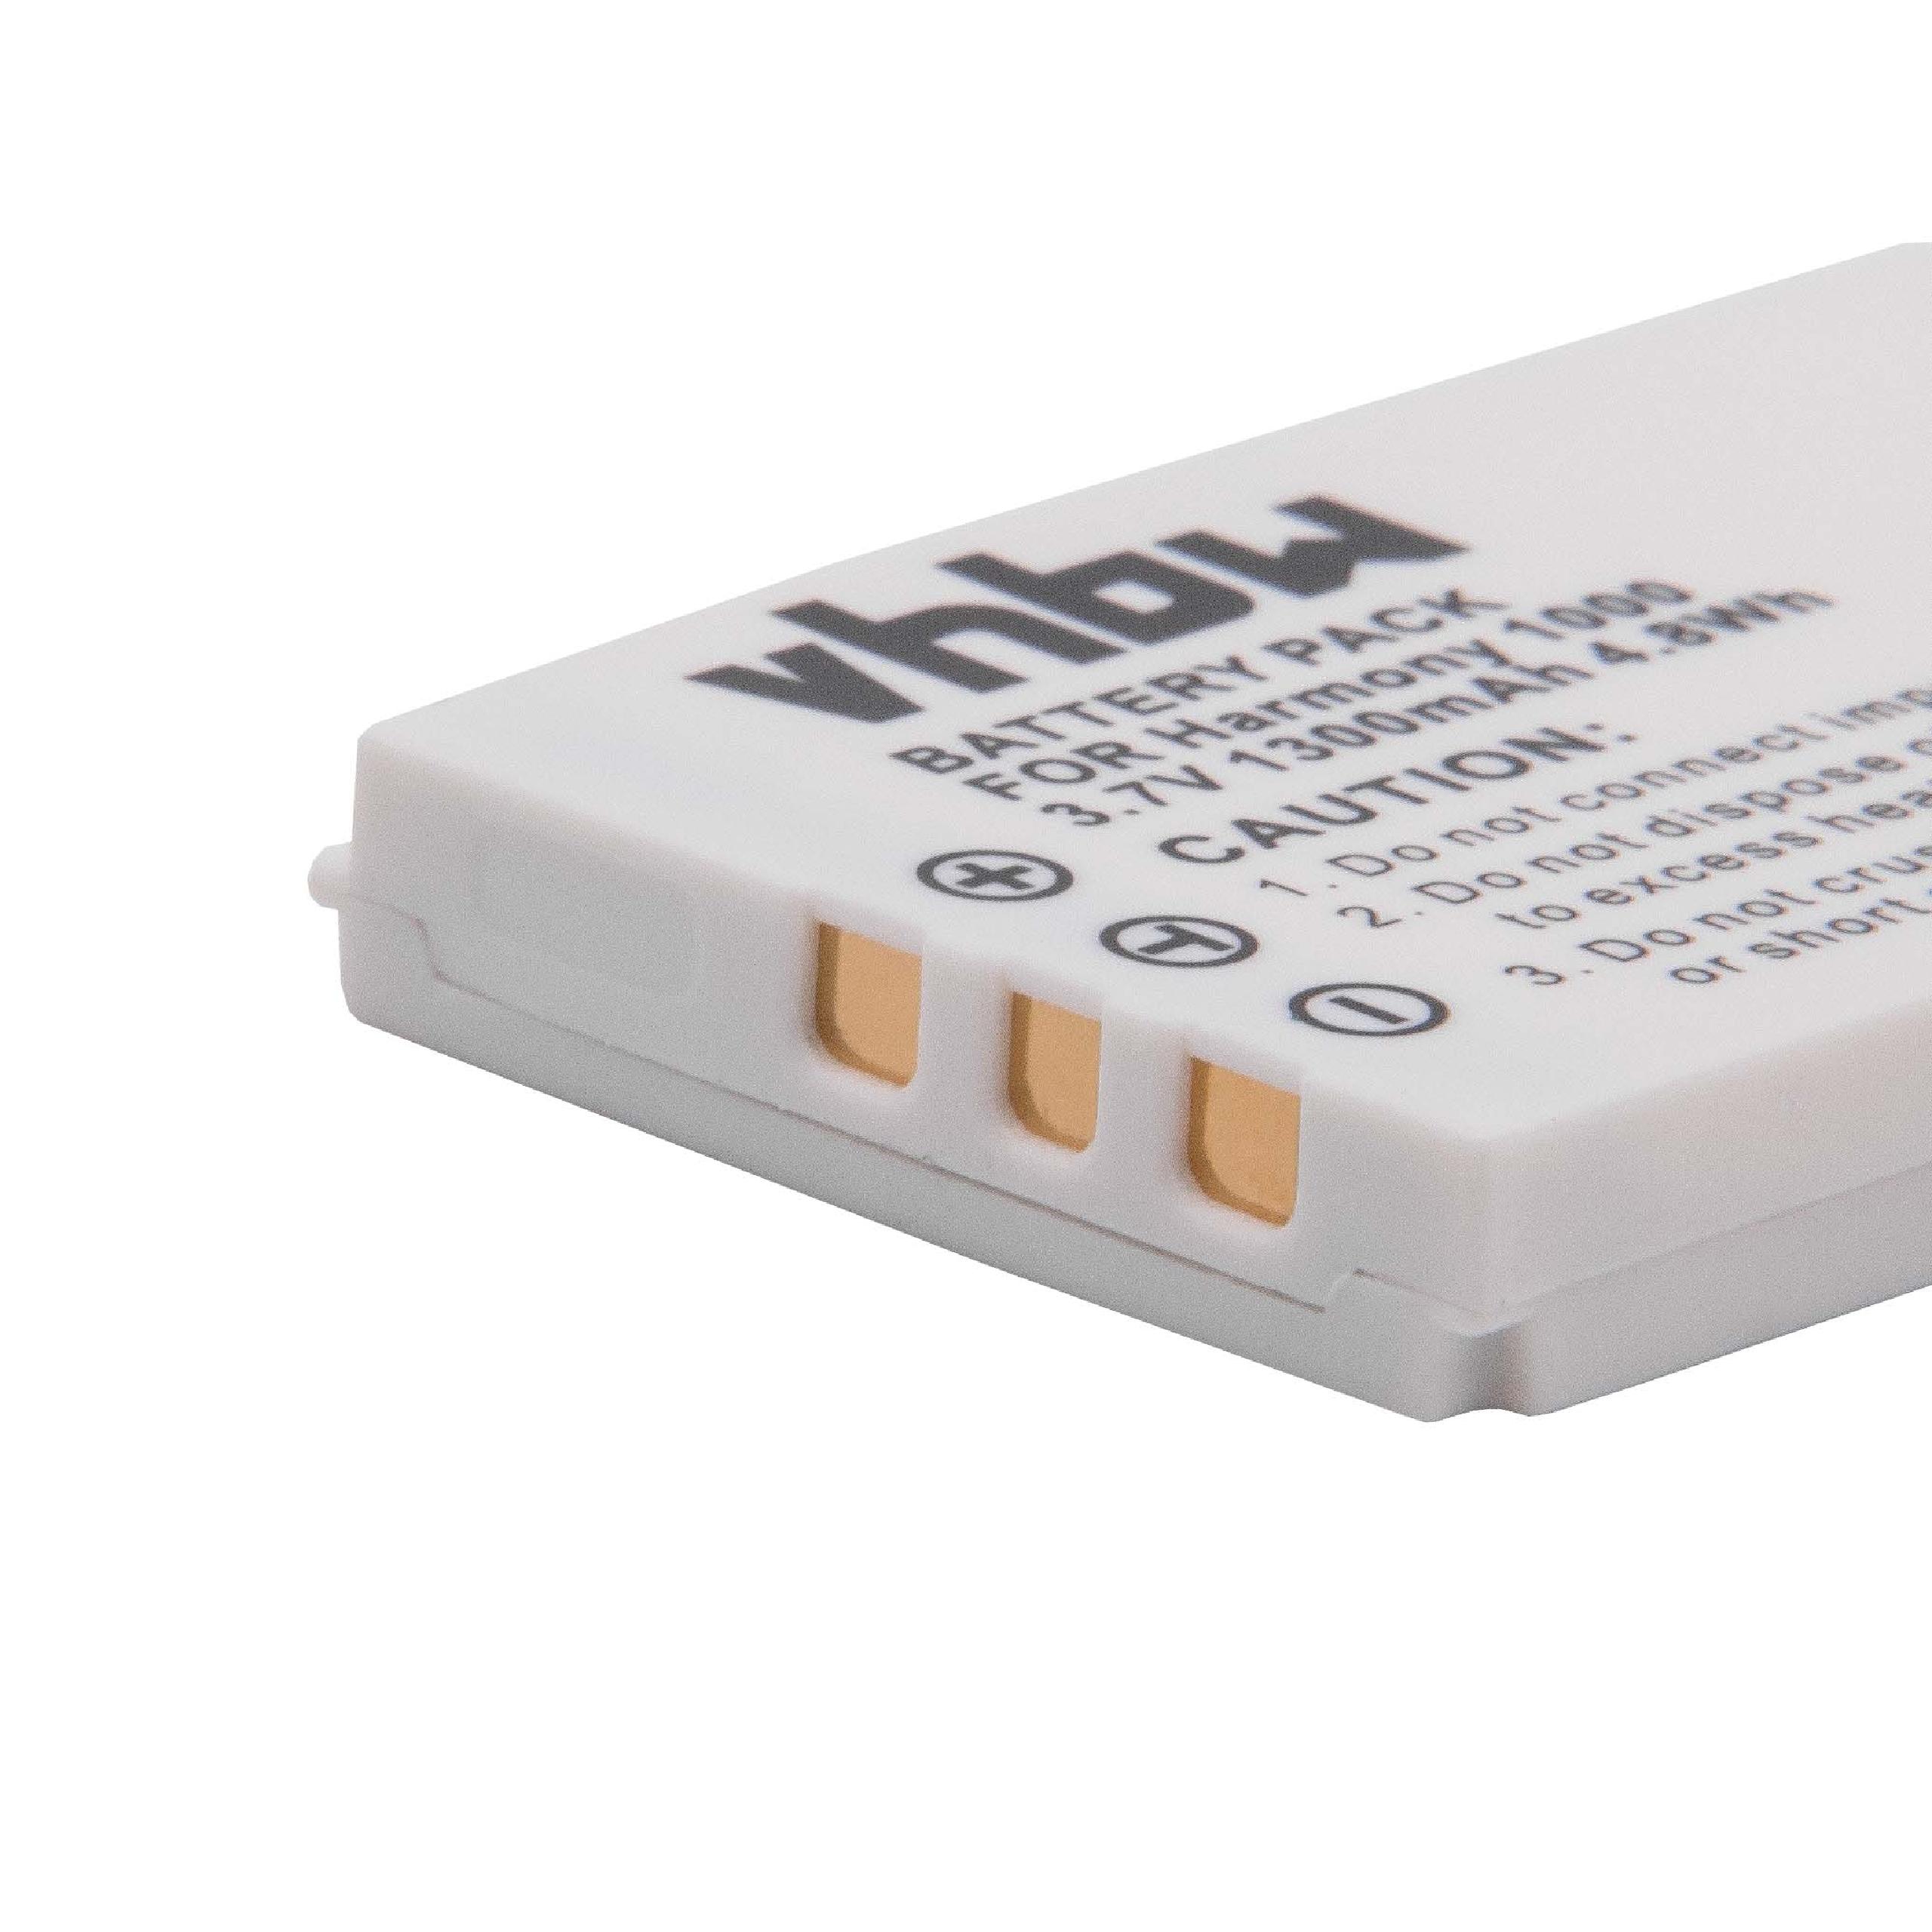 Remote Control Battery Replacement for Logitech 190582-0000, L-LU18, K398, F12440056 - 1300mAh 3.7V Li-Ion